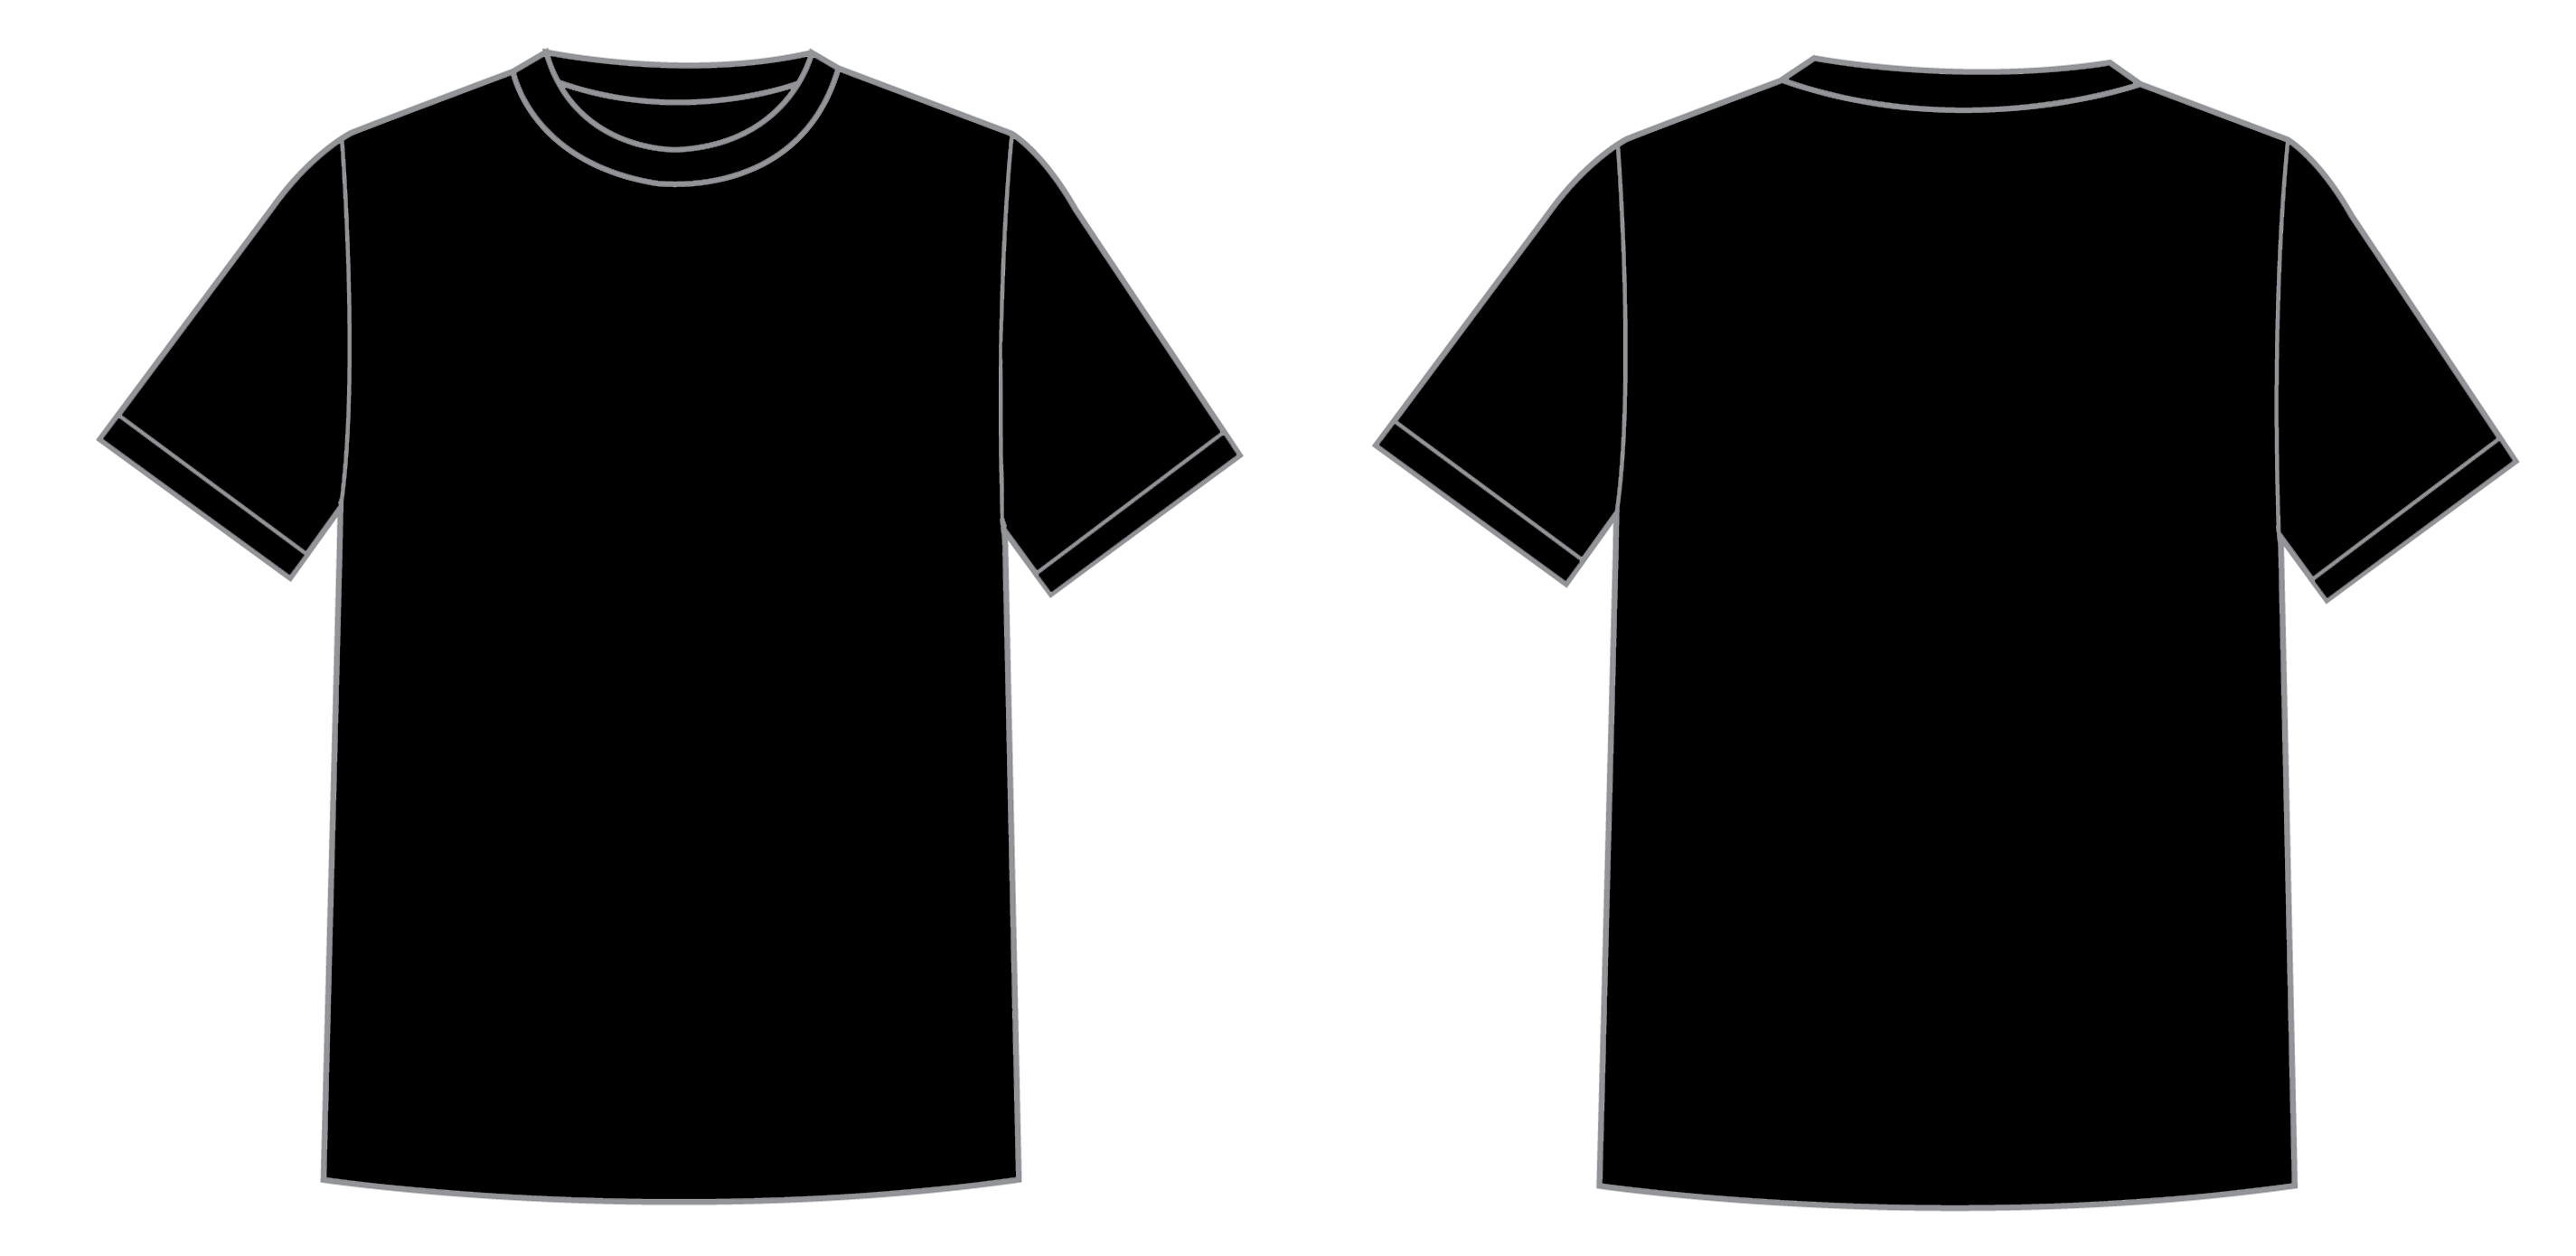 Free T Shirt Printing Templates, Download Free T Shirt Printing